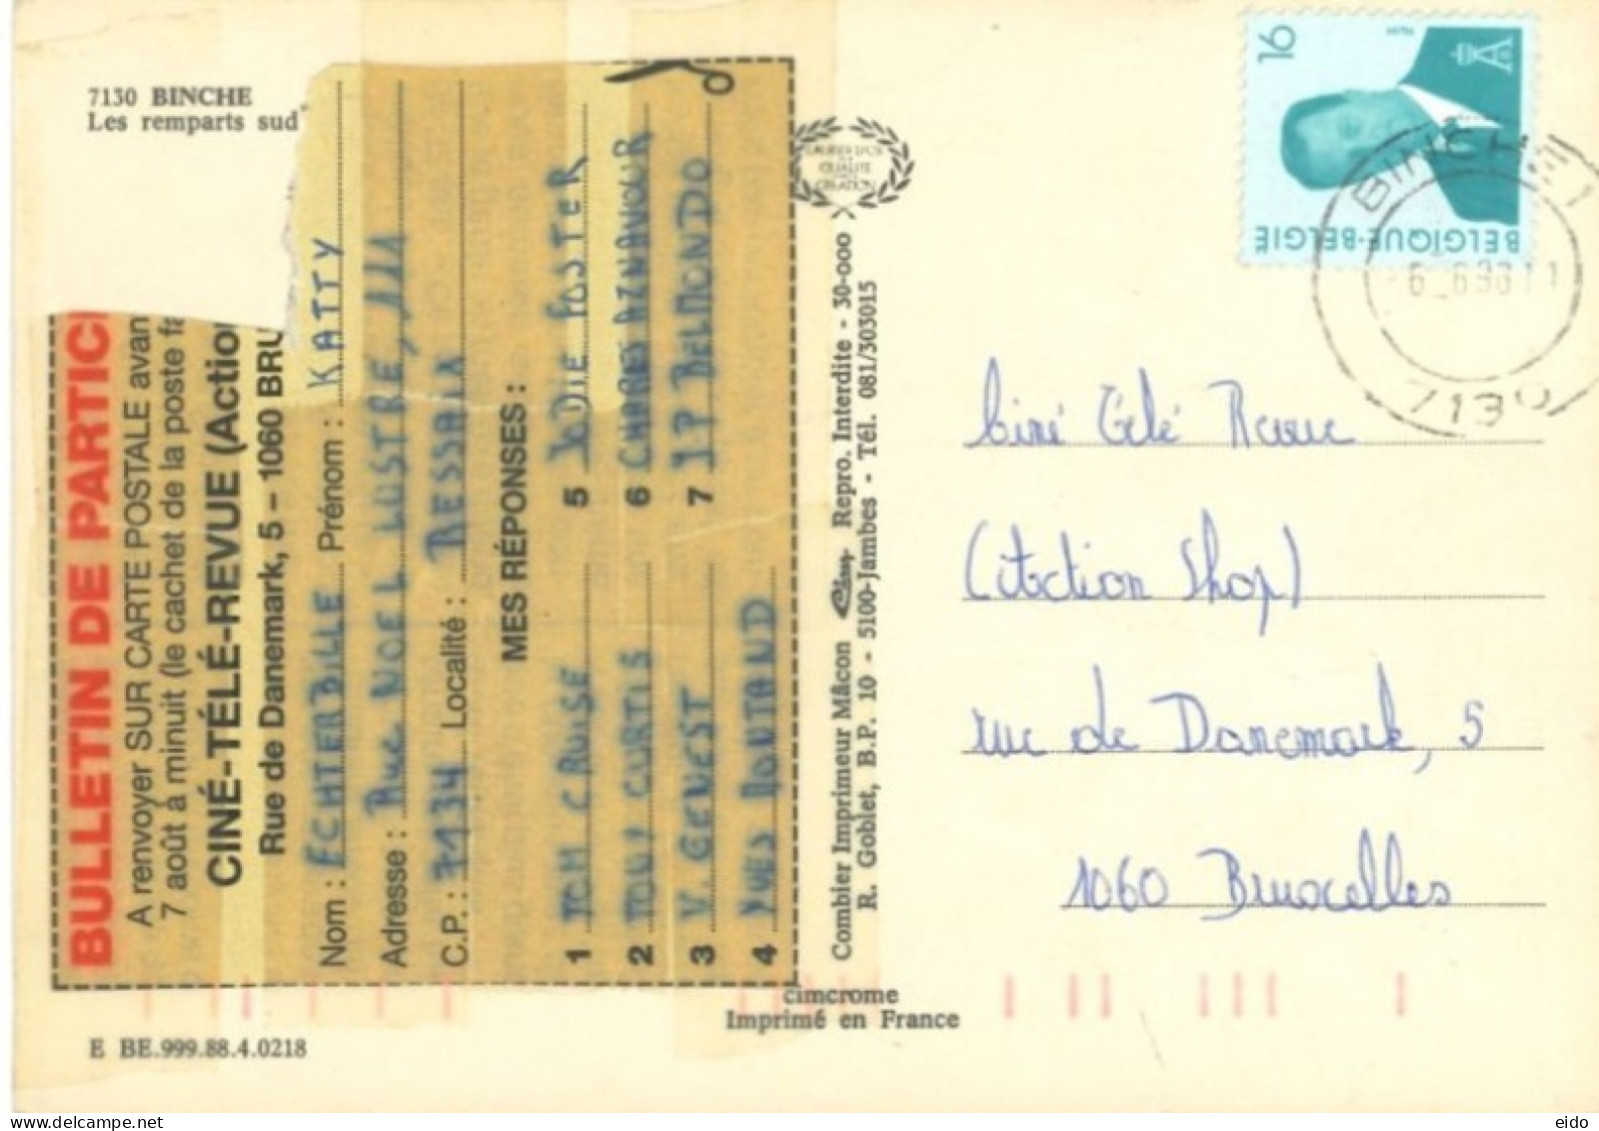 BELGIUM - 1963, BINCHE, LE REMPARTS SUD POSTCARD WITH STAMP SENT TO BRUOCELLES. - Storia Postale